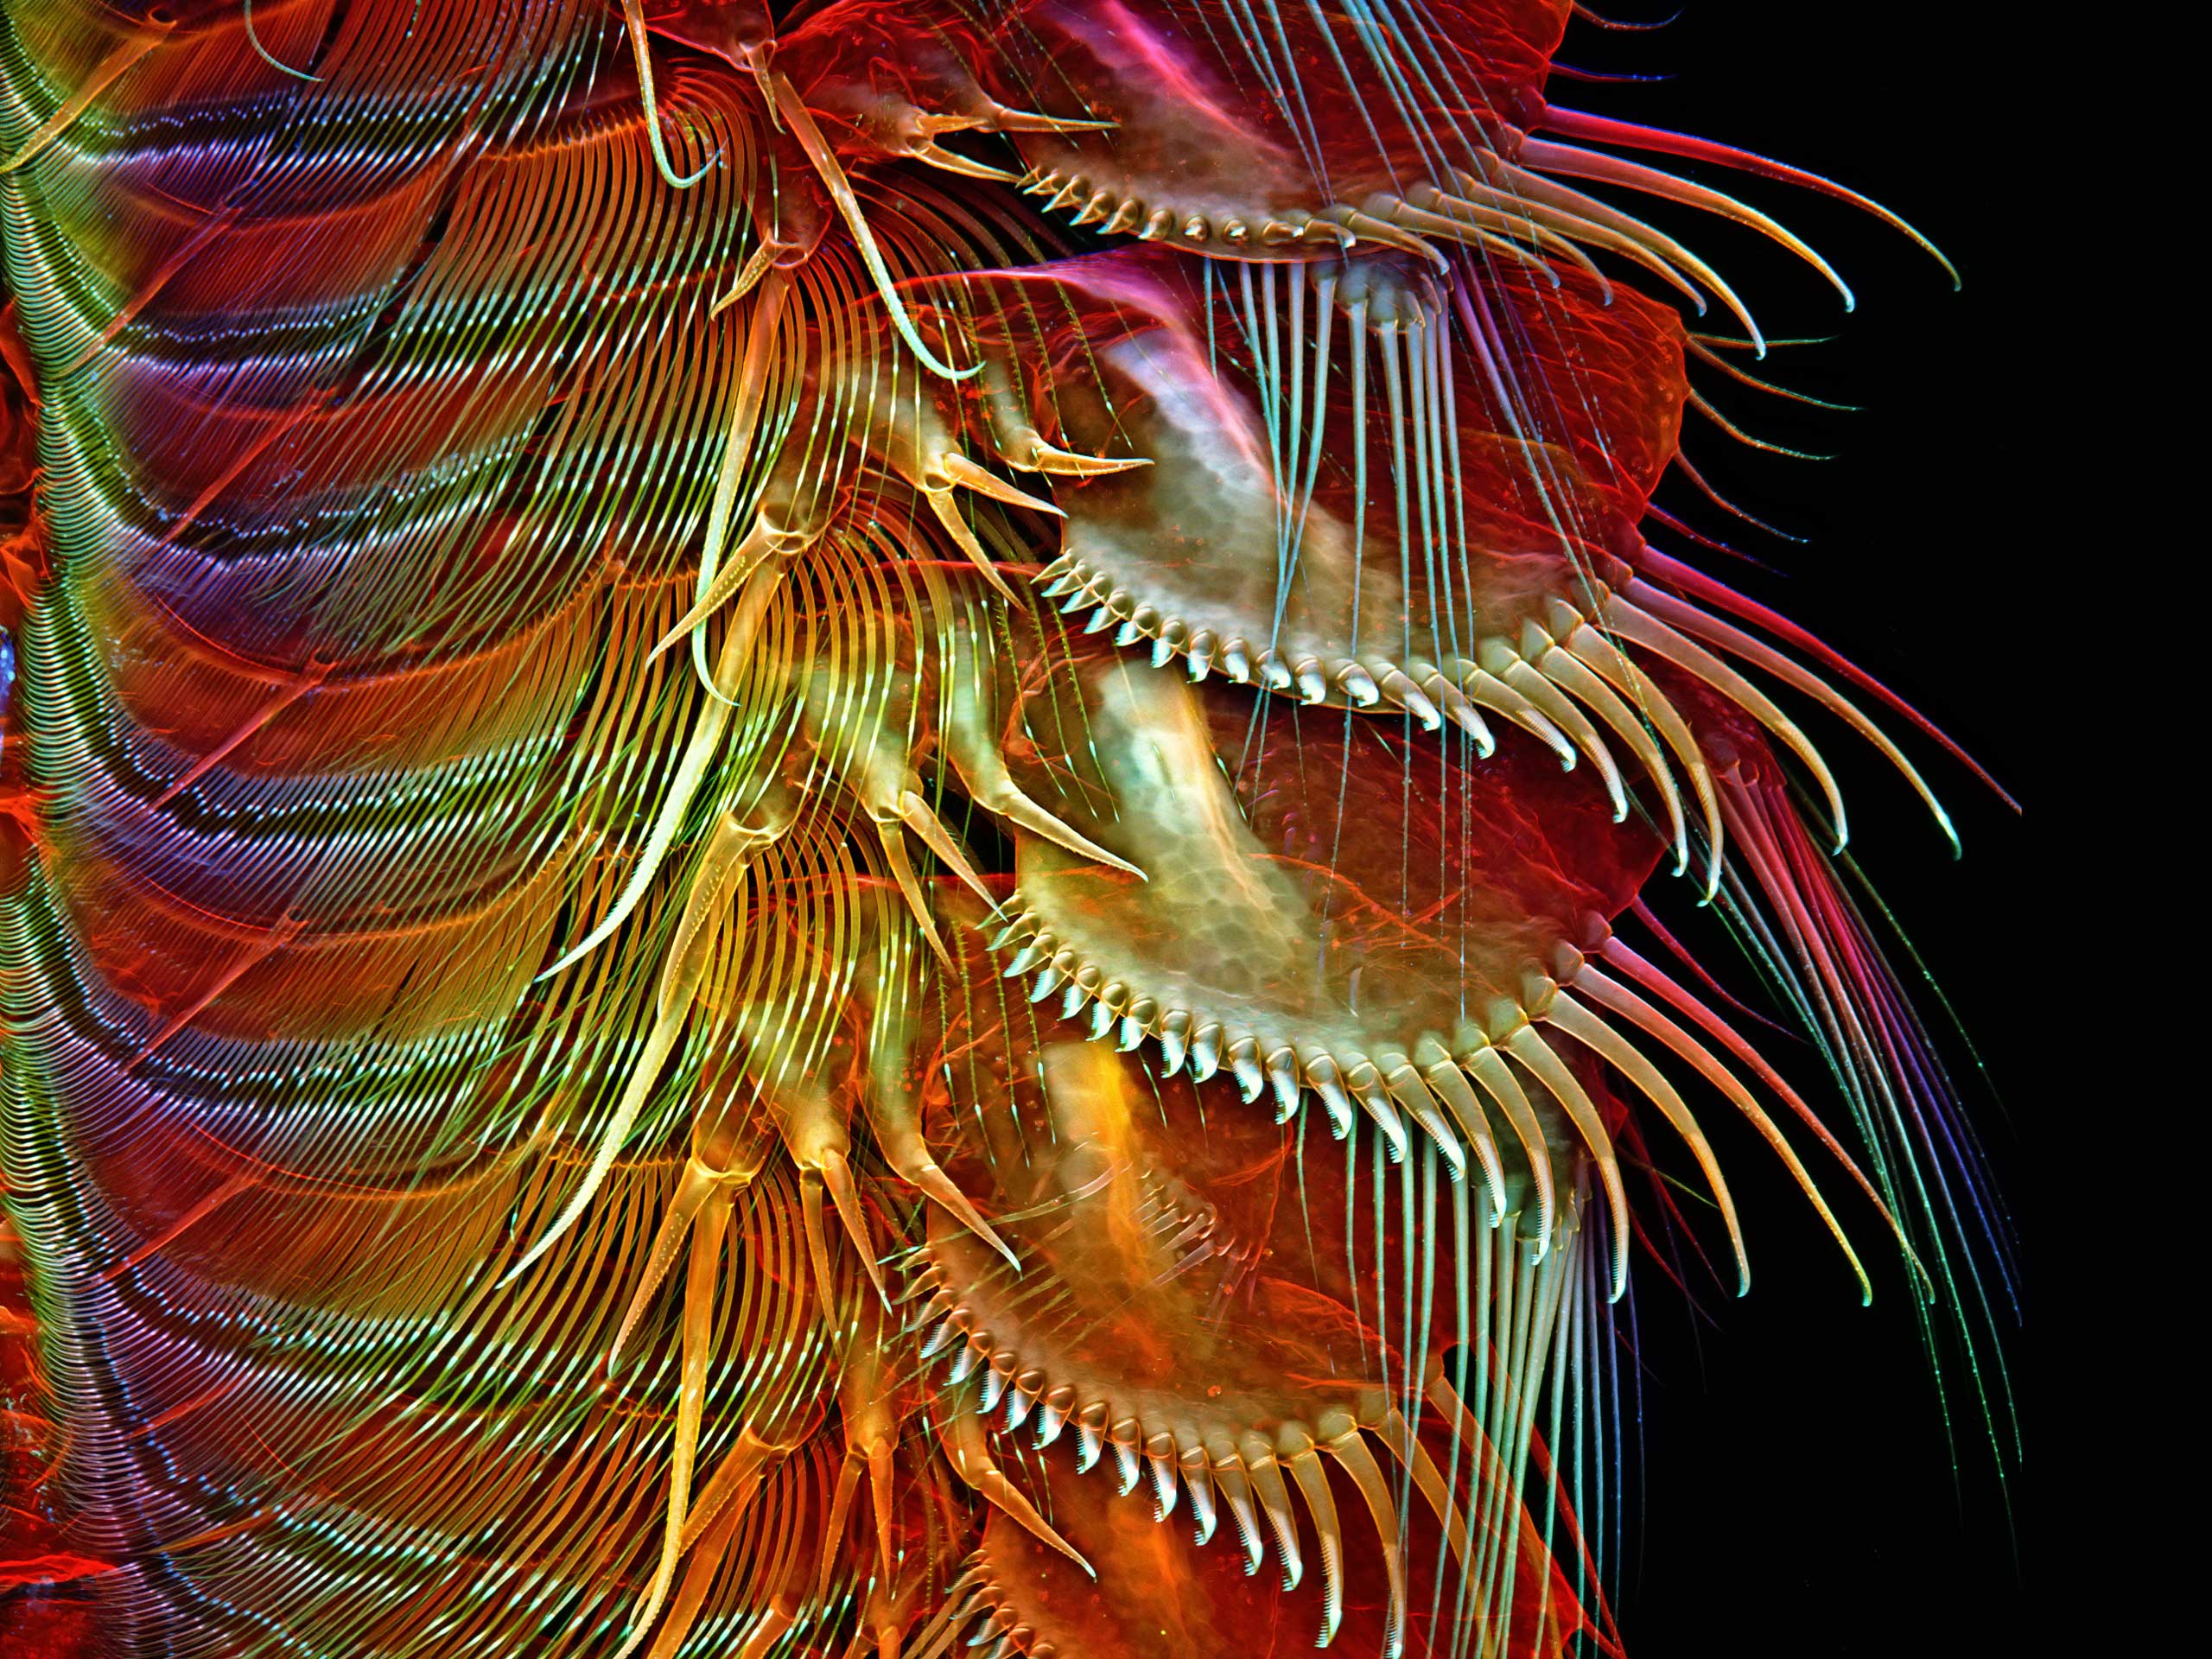 Appendages of a common brine shrimp at 100x magnification.